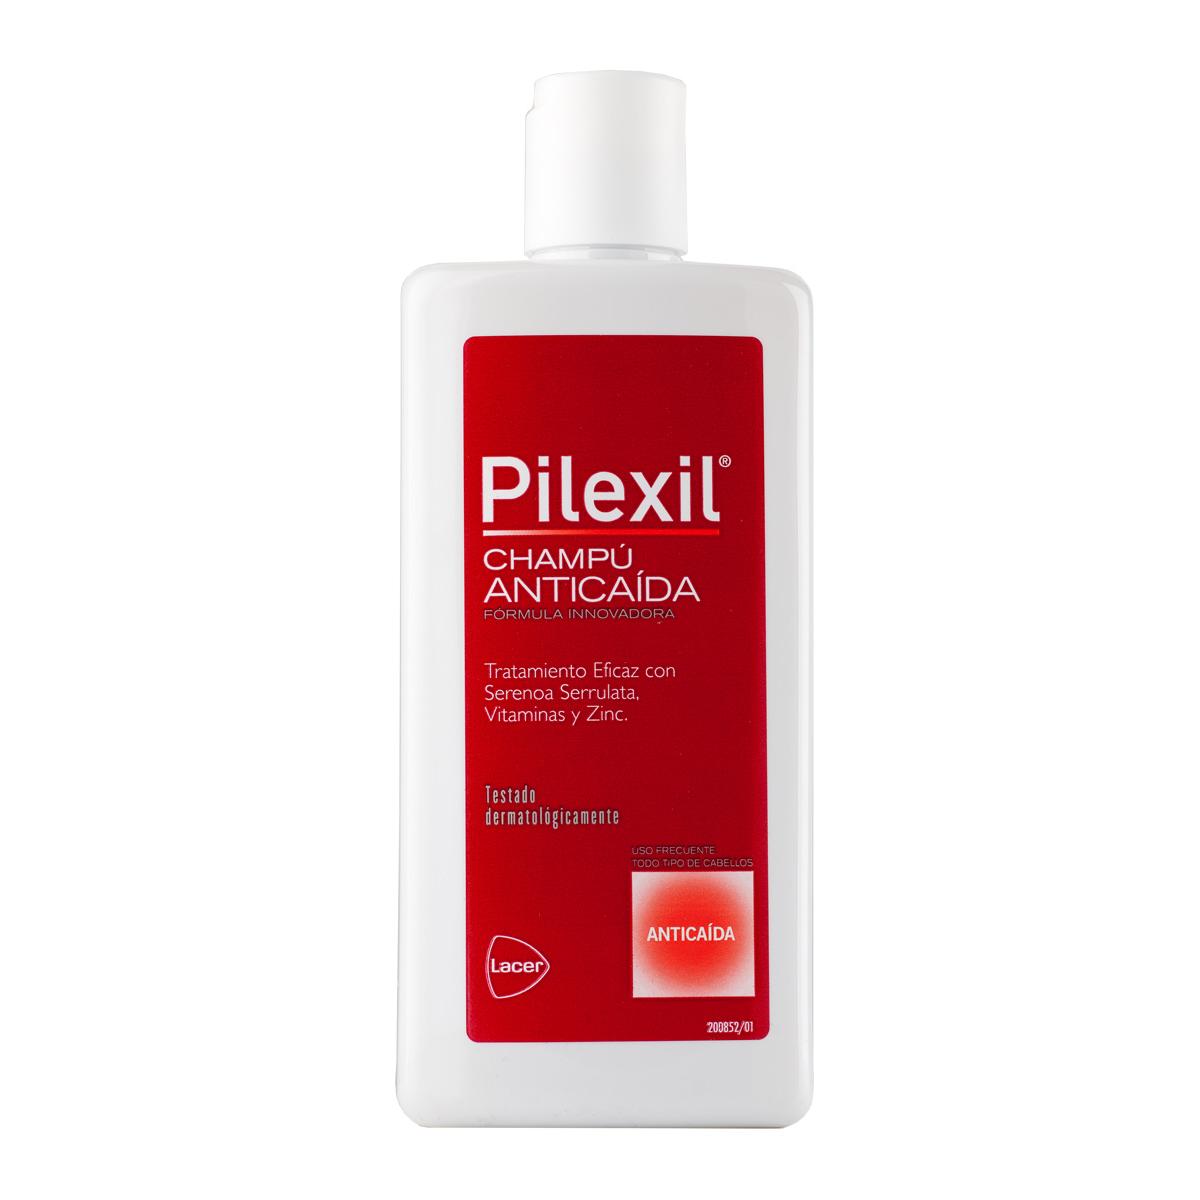 Pilexil - Pilexil champu anticaida 300 ml